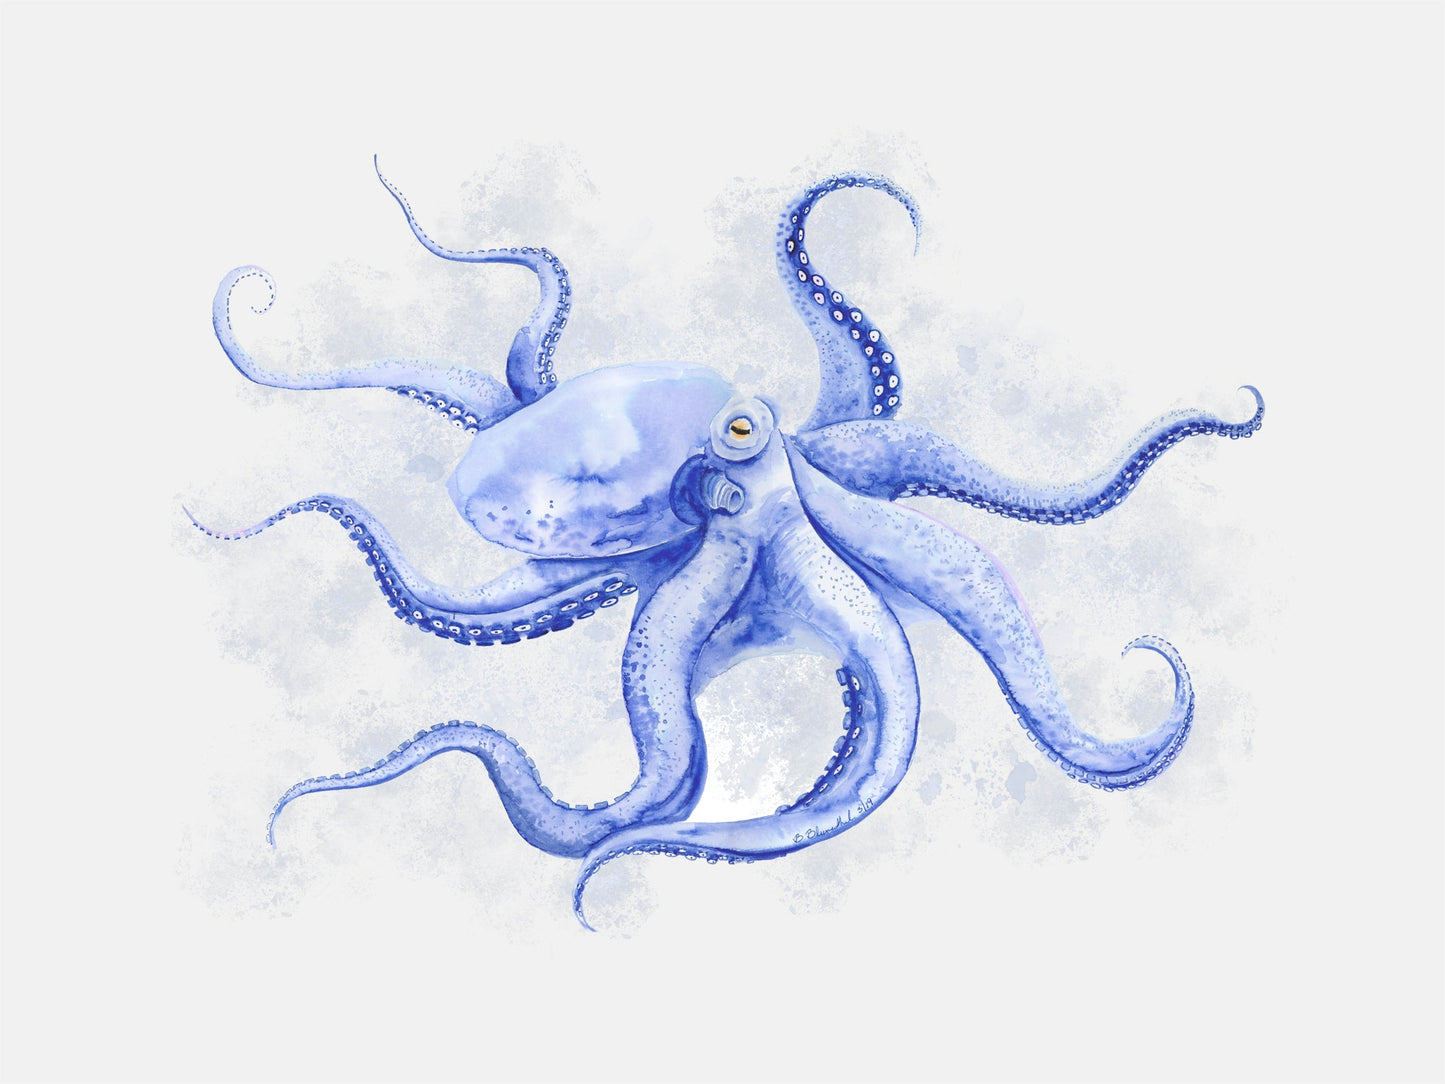 Octopus Portrait Canvas Wall Art